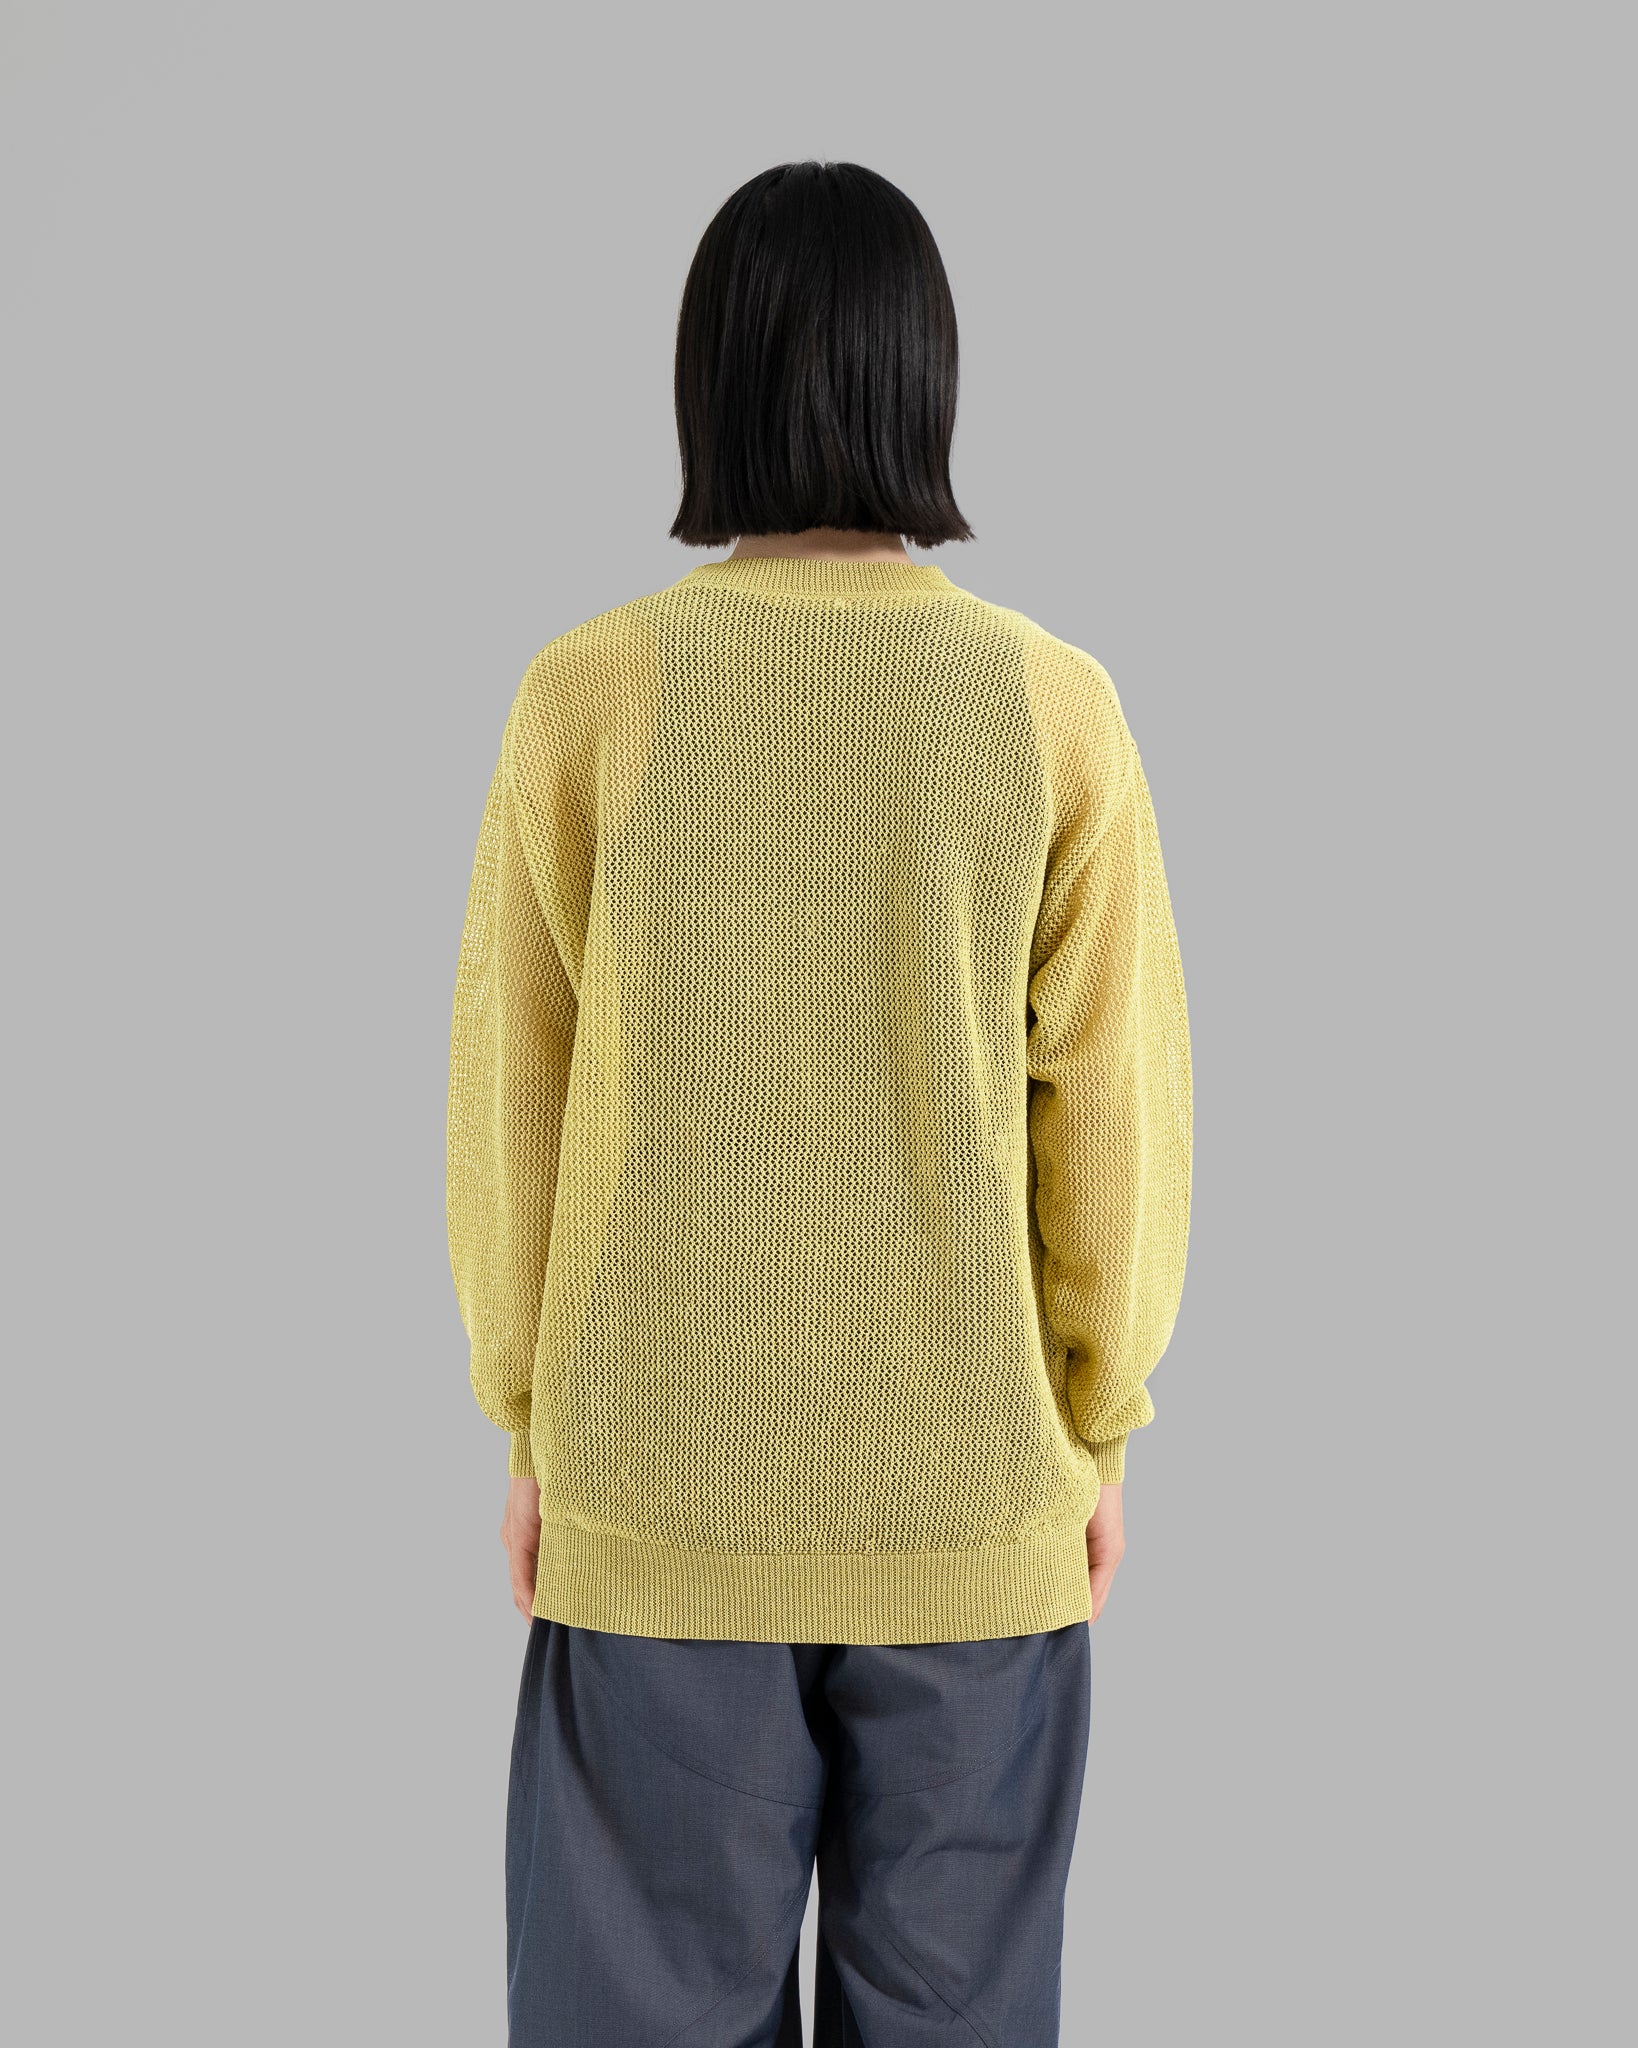 Gima Cotton Mesh Knit 풀오버 스웨터 -Smoke Yellow